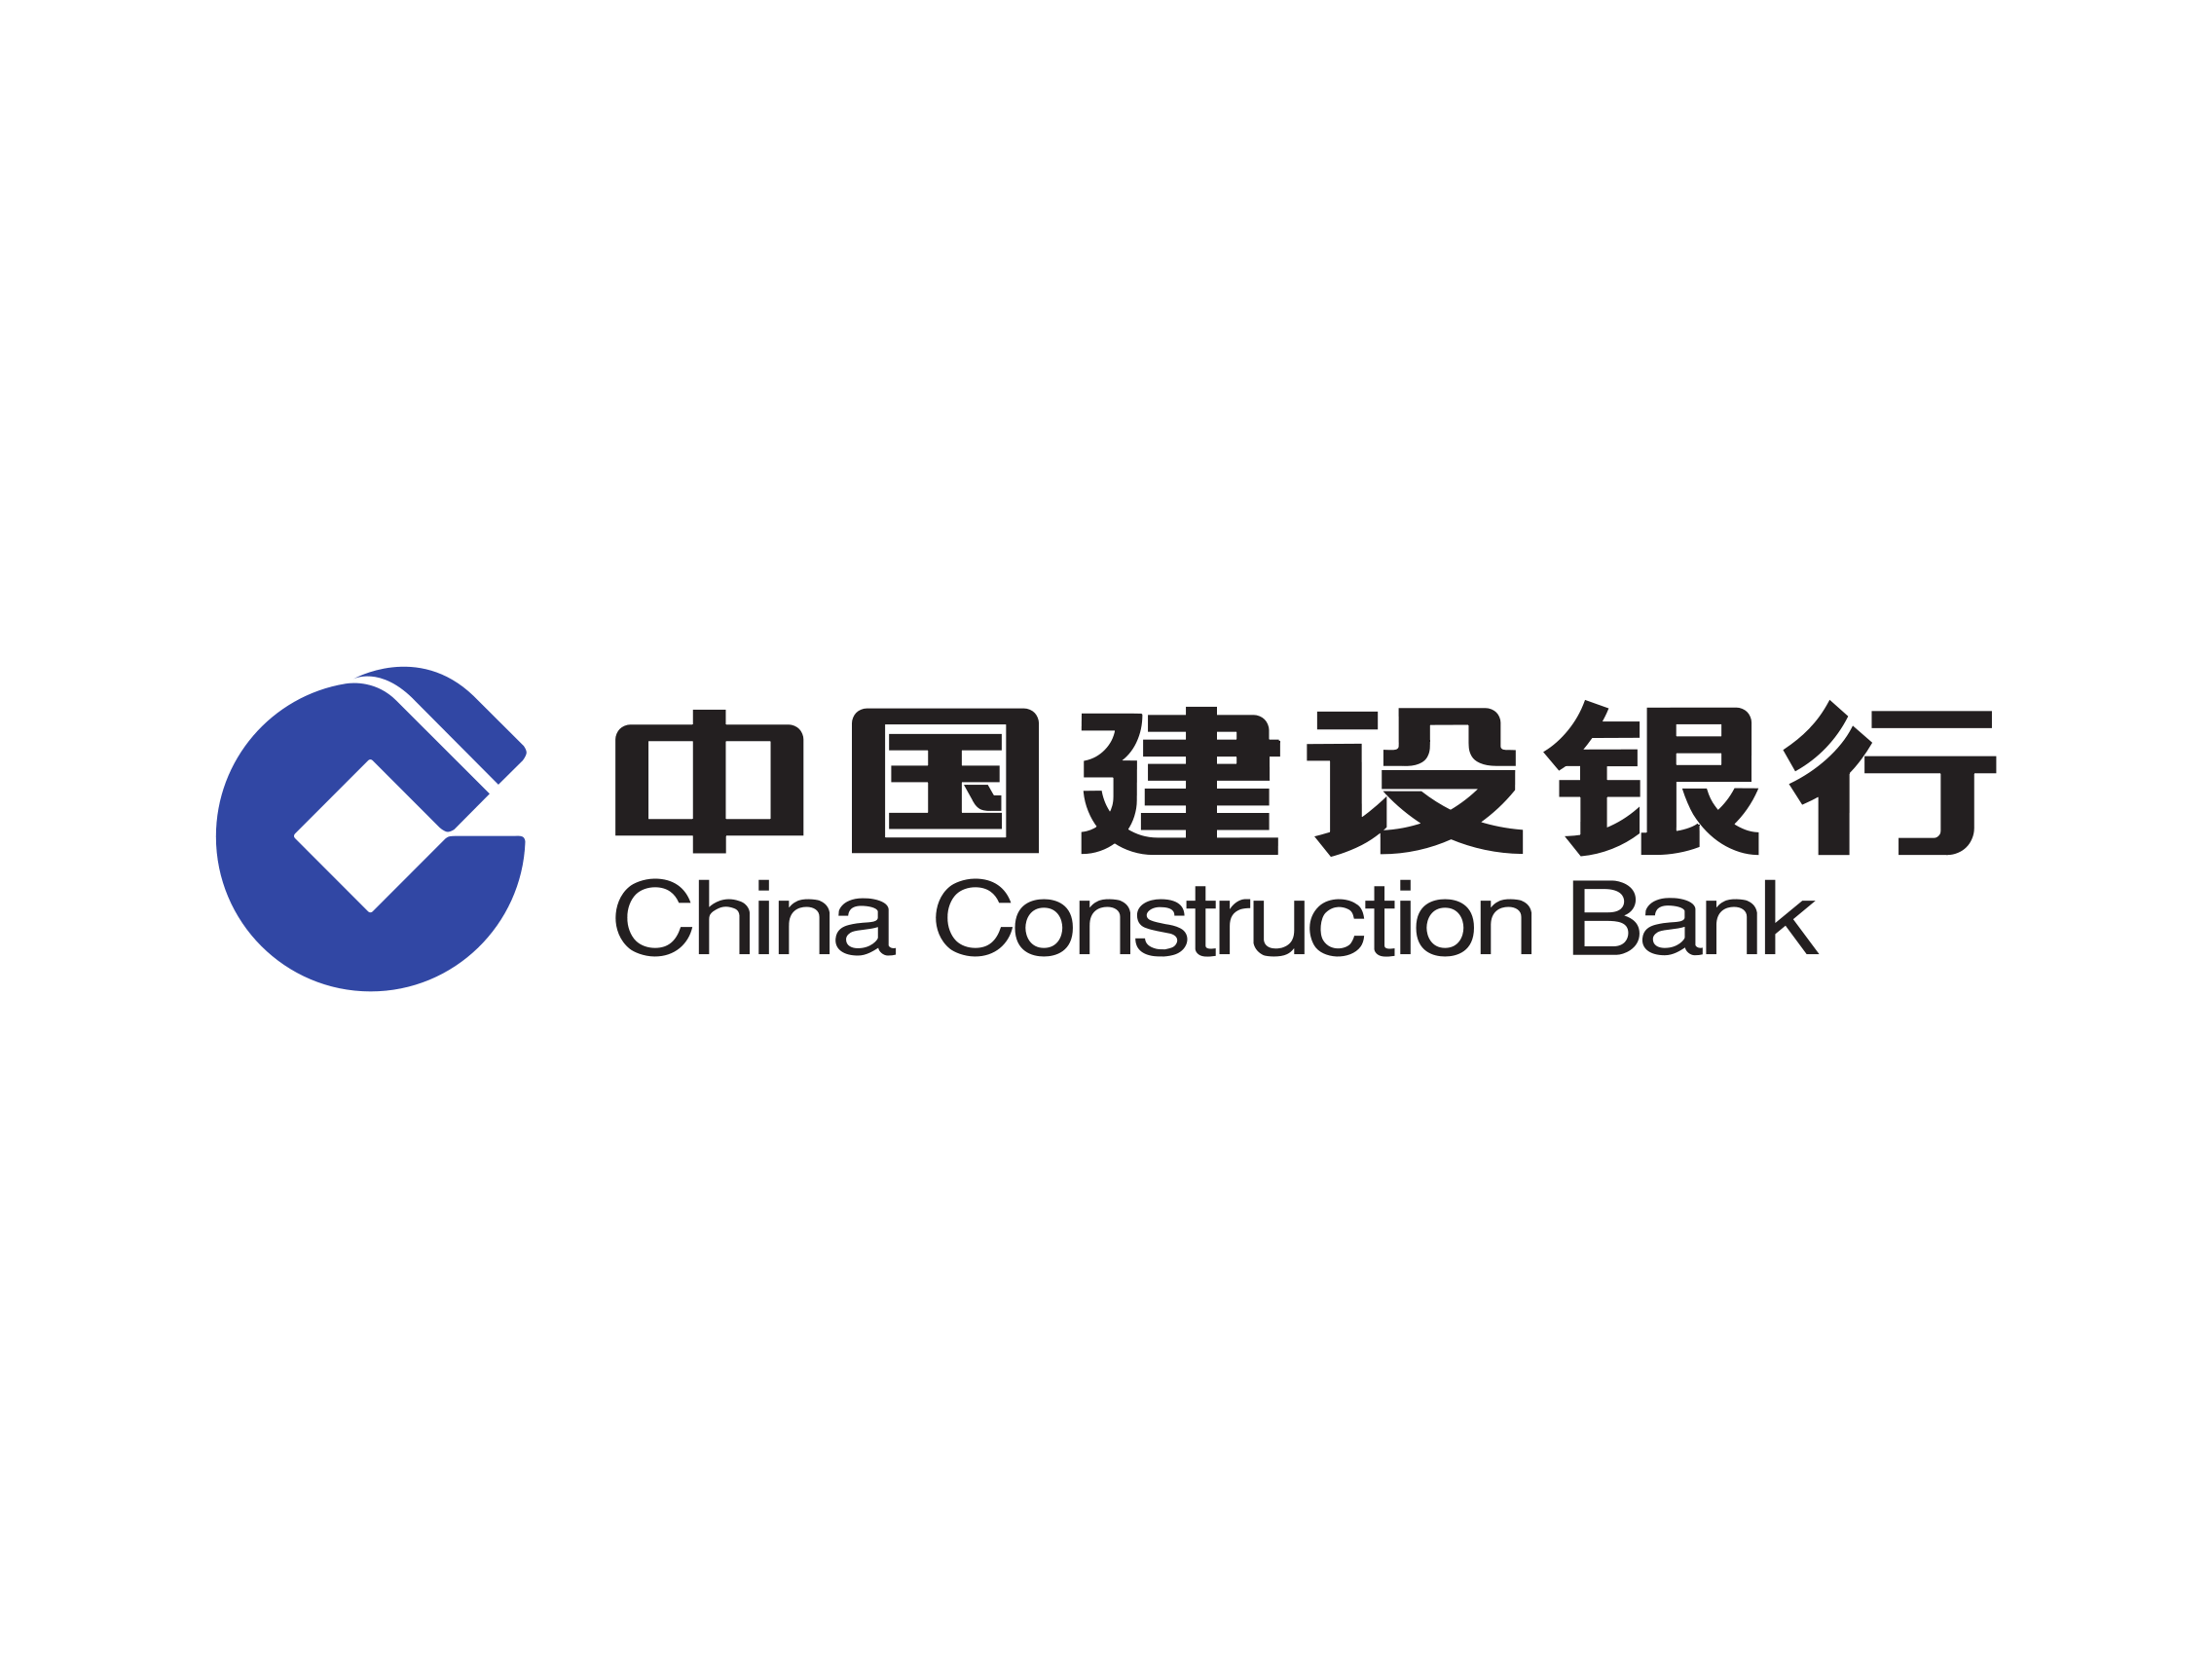 Chinese Bank Logo - China Construction Bank logo logotype